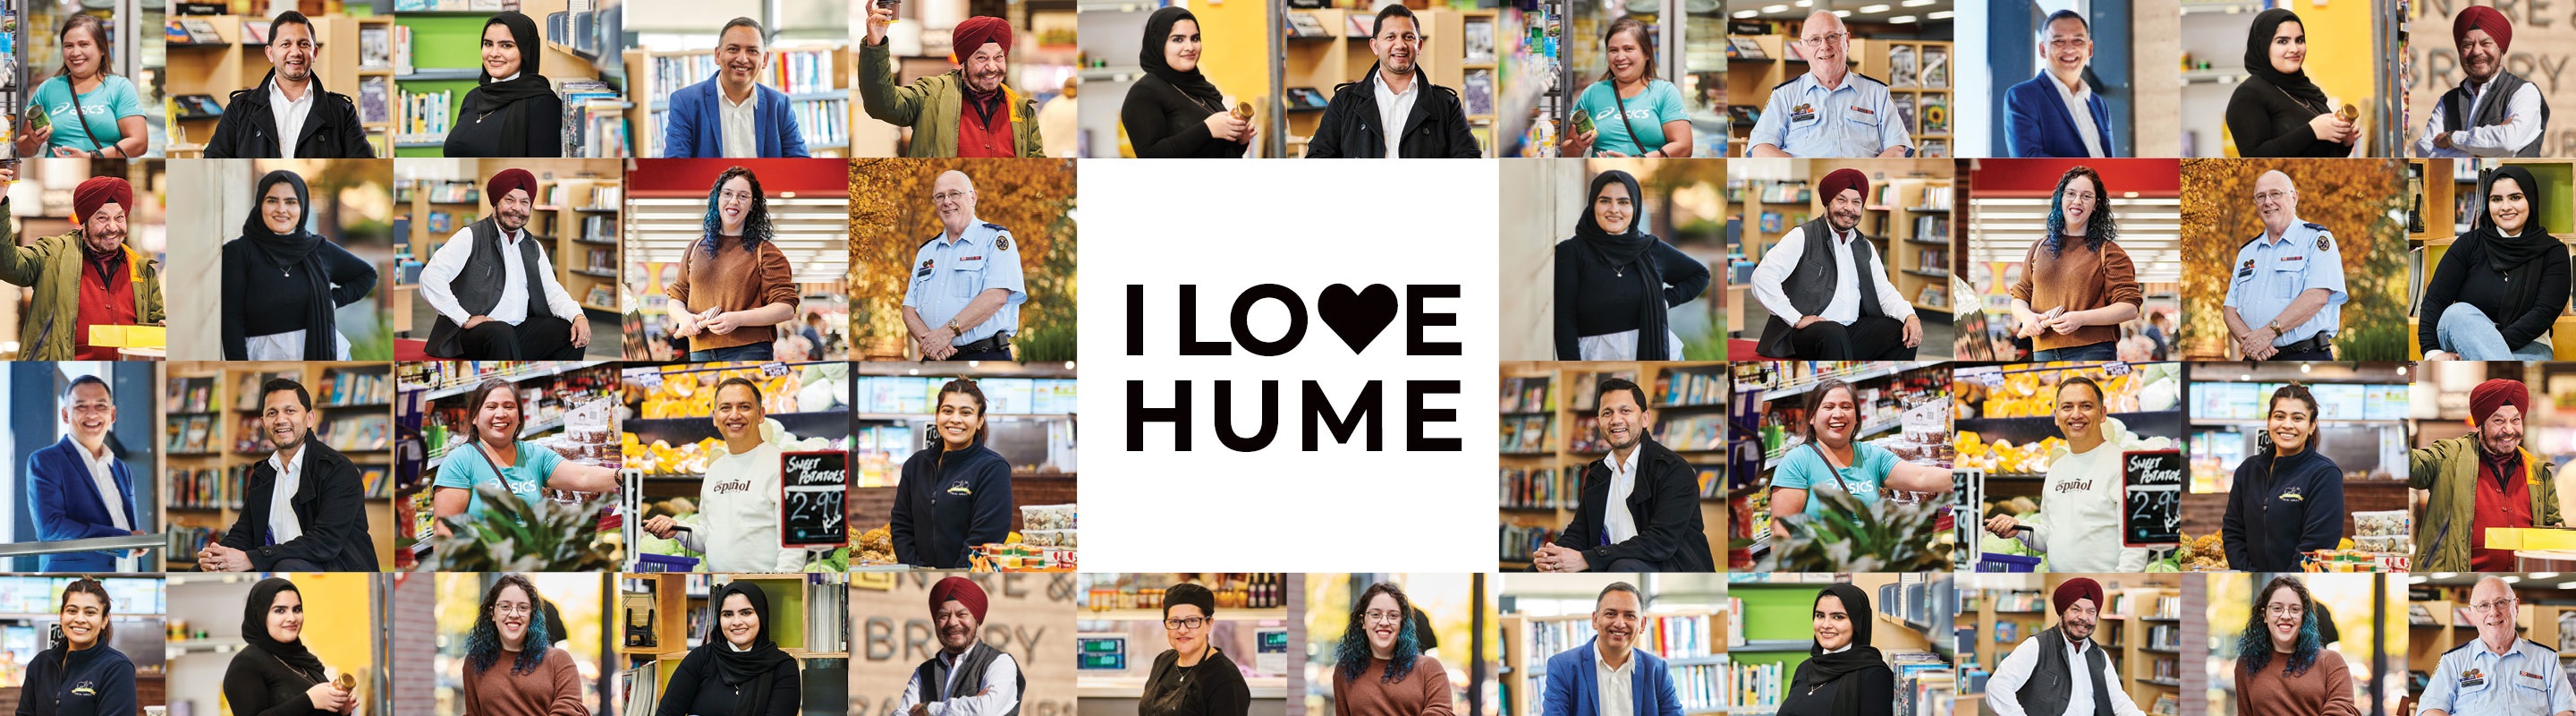 I-Love-Hume---Website-Rolling-Banner.jpg